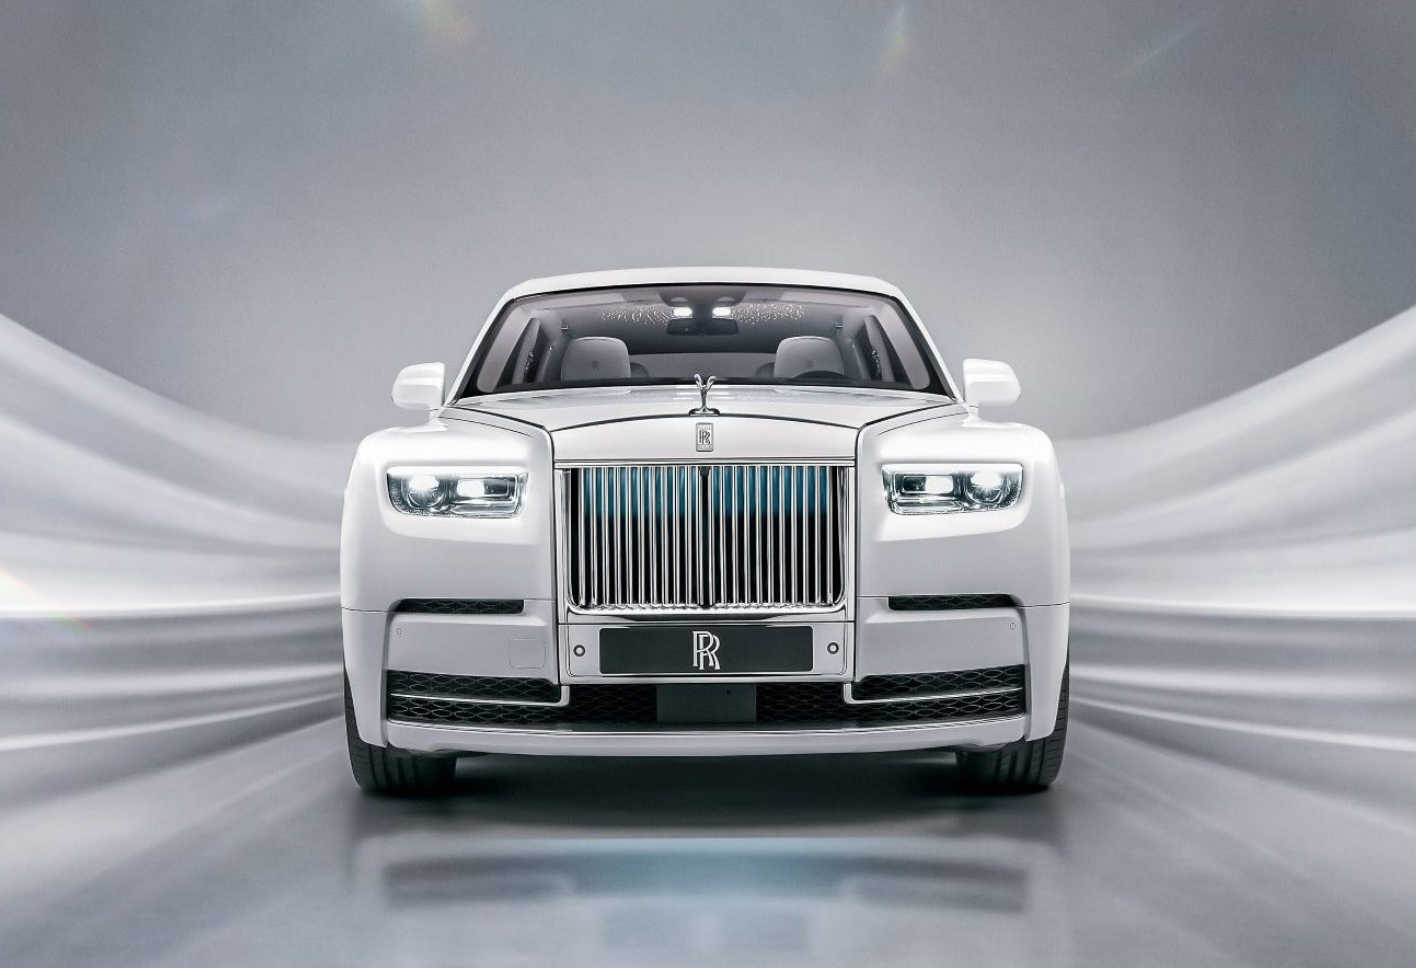 Rolls-Royce updates the eighth generation of the Phantom